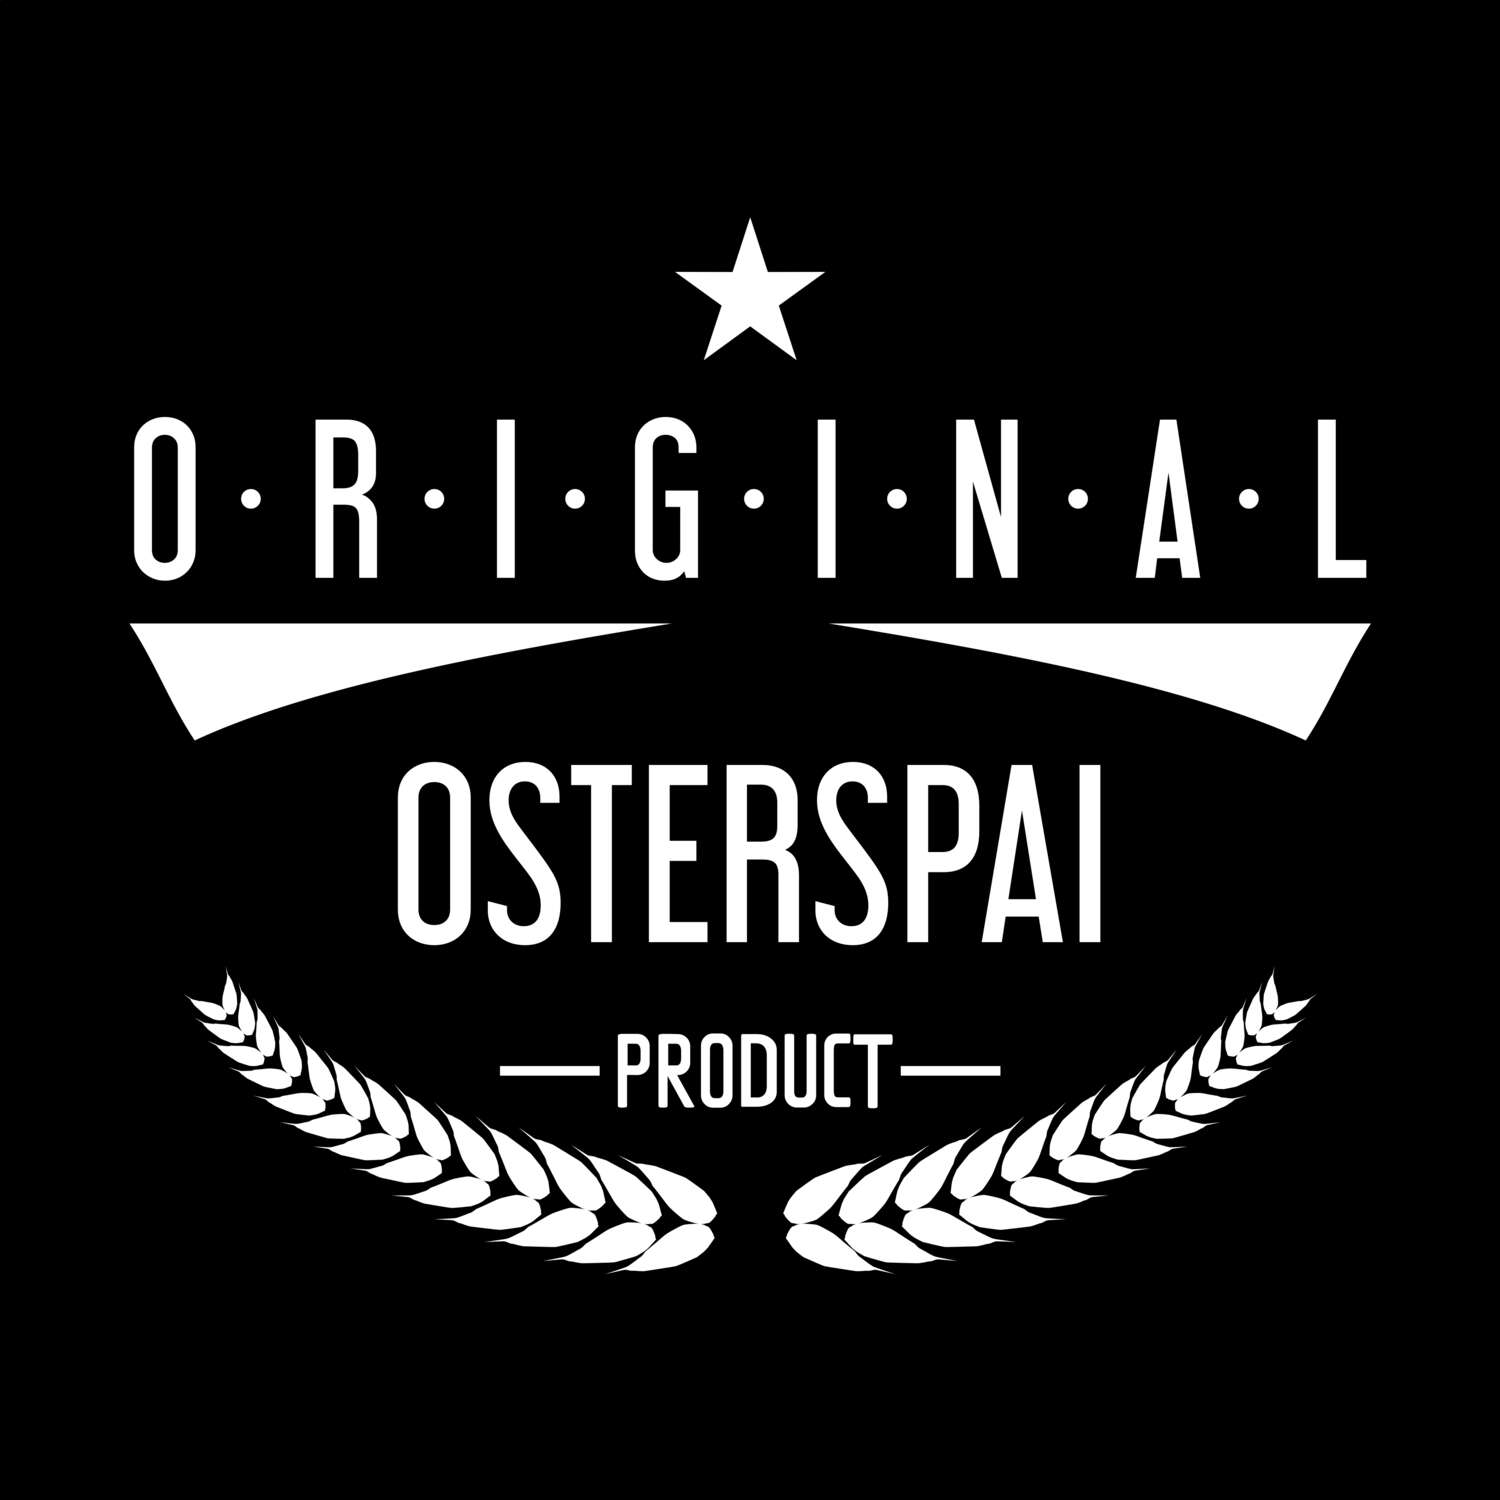 Osterspai T-Shirt »Original Product«